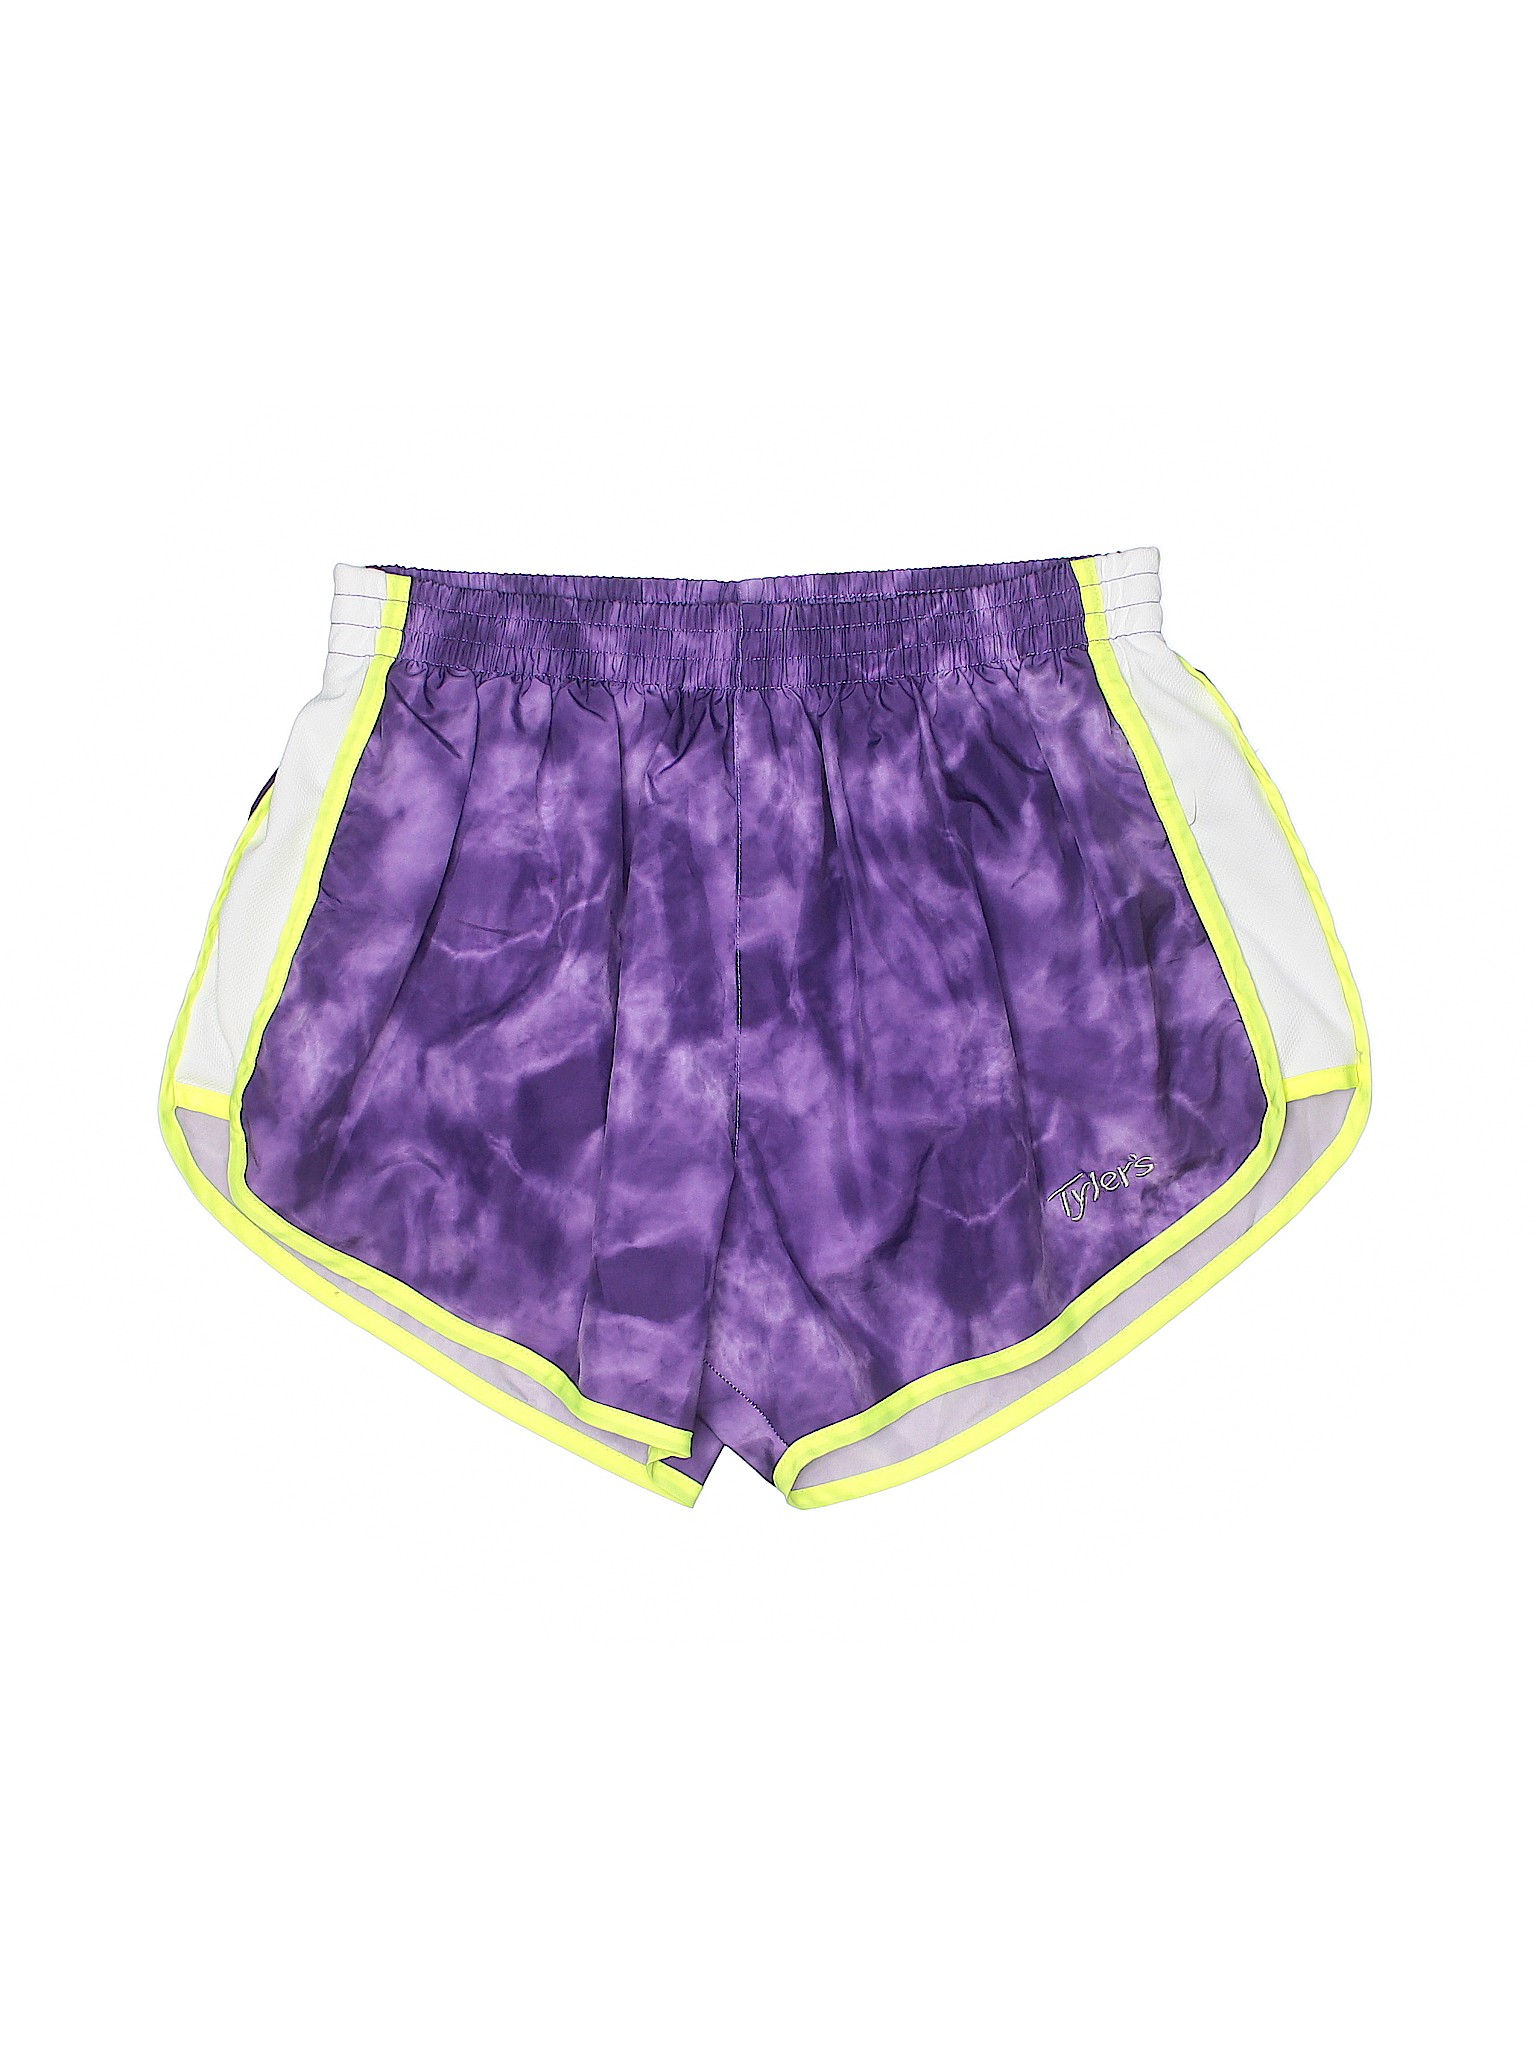 Tyler's Women Purple Athletic Shorts XL | eBay